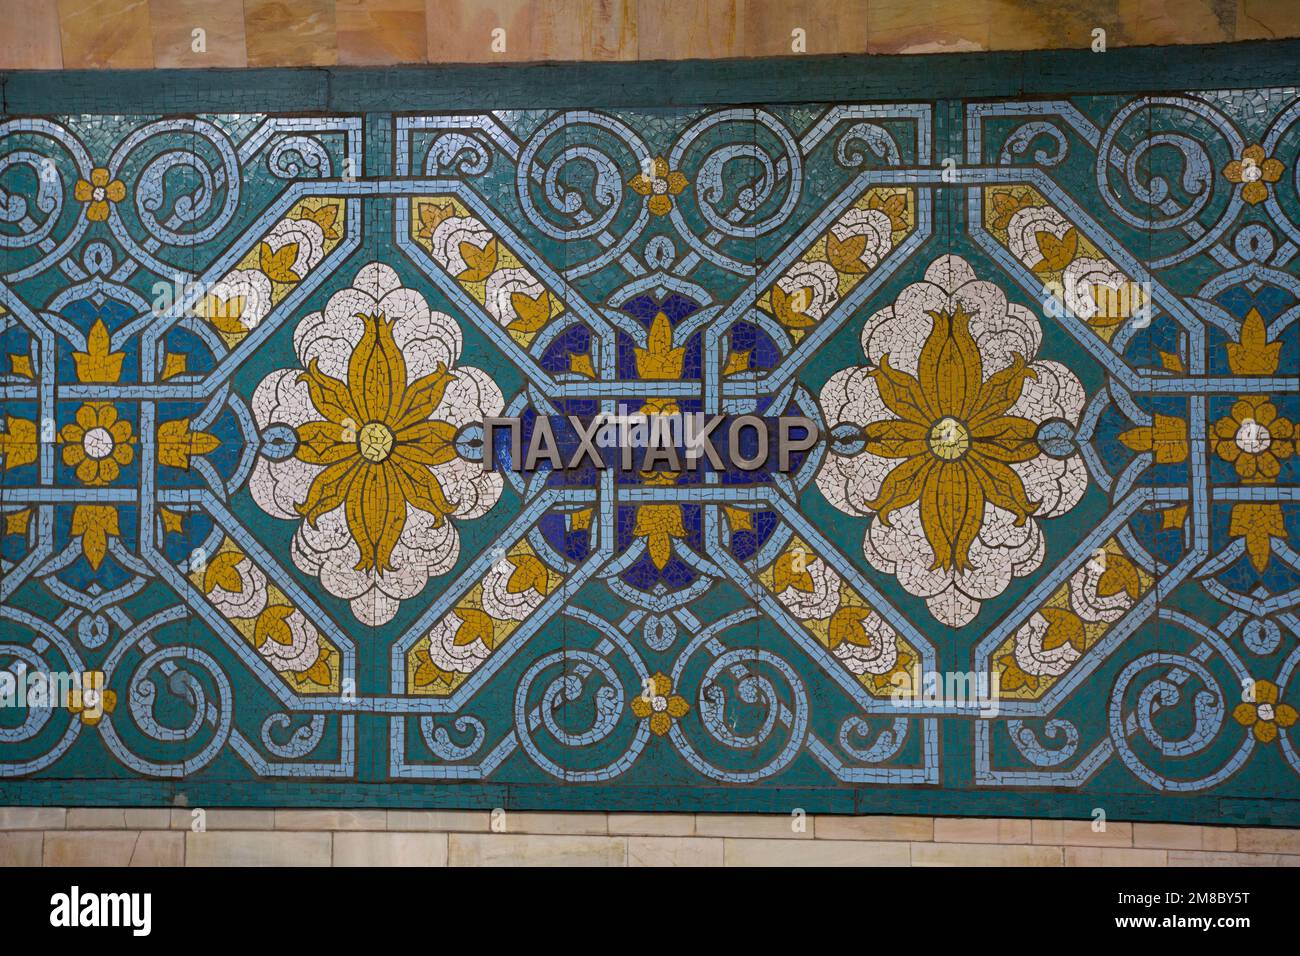 Pakhator Station, métro Tashkent, Tashkent, Ouzbékistan Banque D'Images